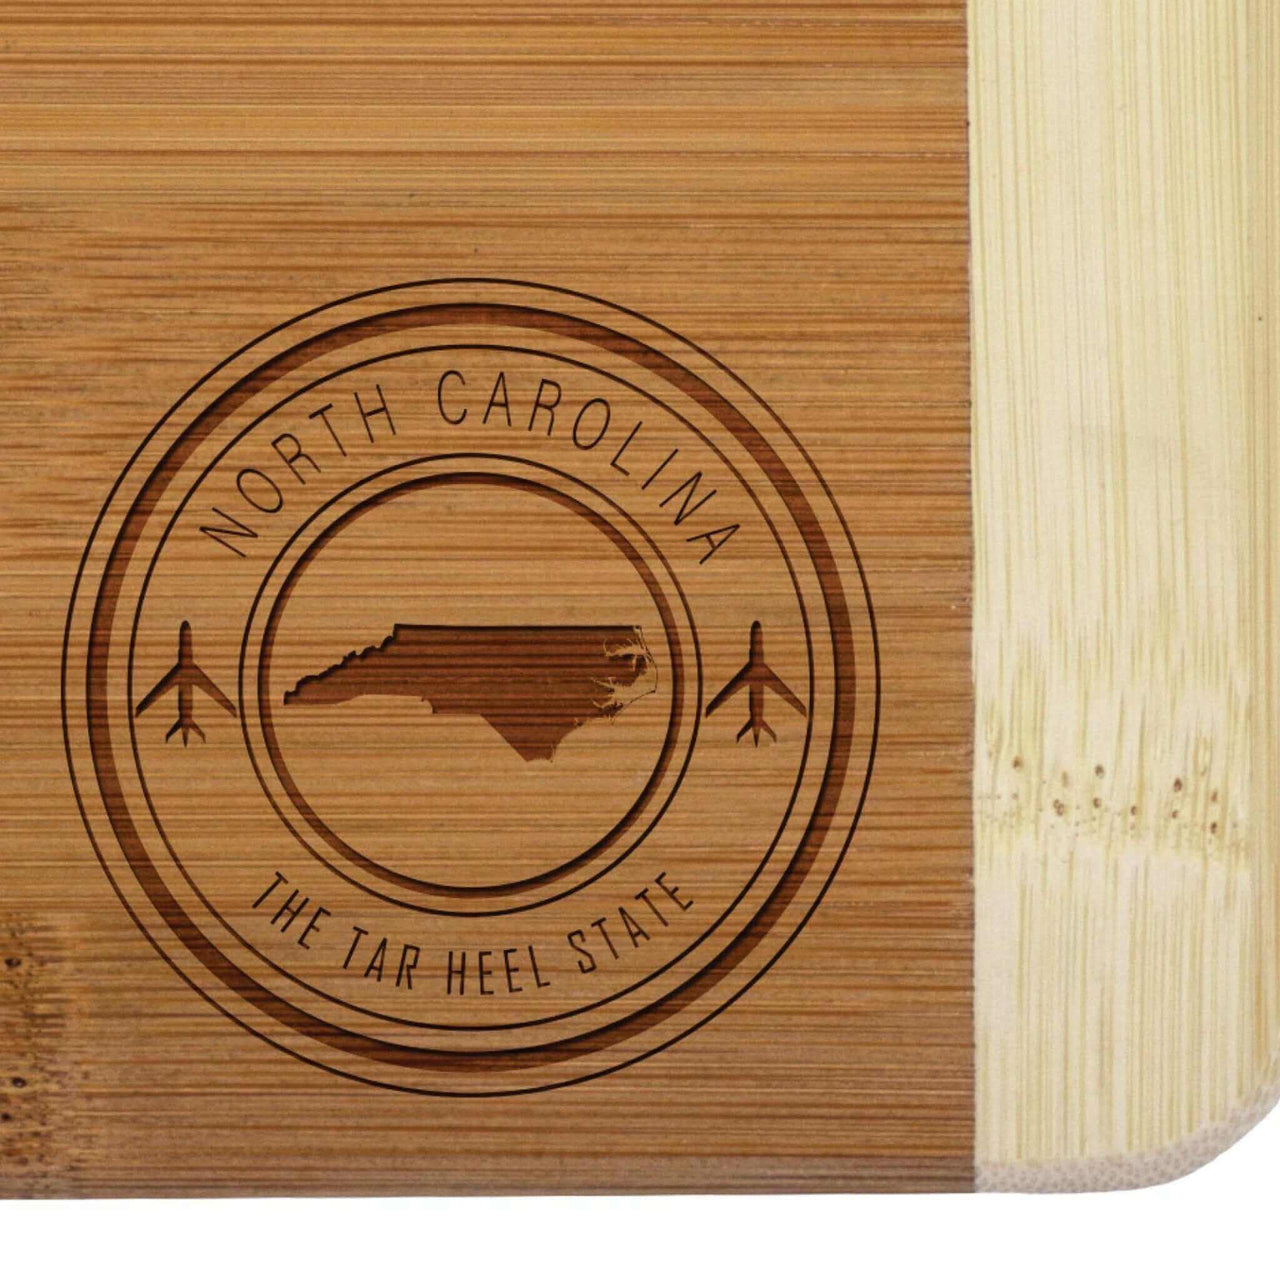 Rustic North Carolina Souvenir Mini Bar Board Set - Wooden cutting board with engraved North Carolina state shape and motto.